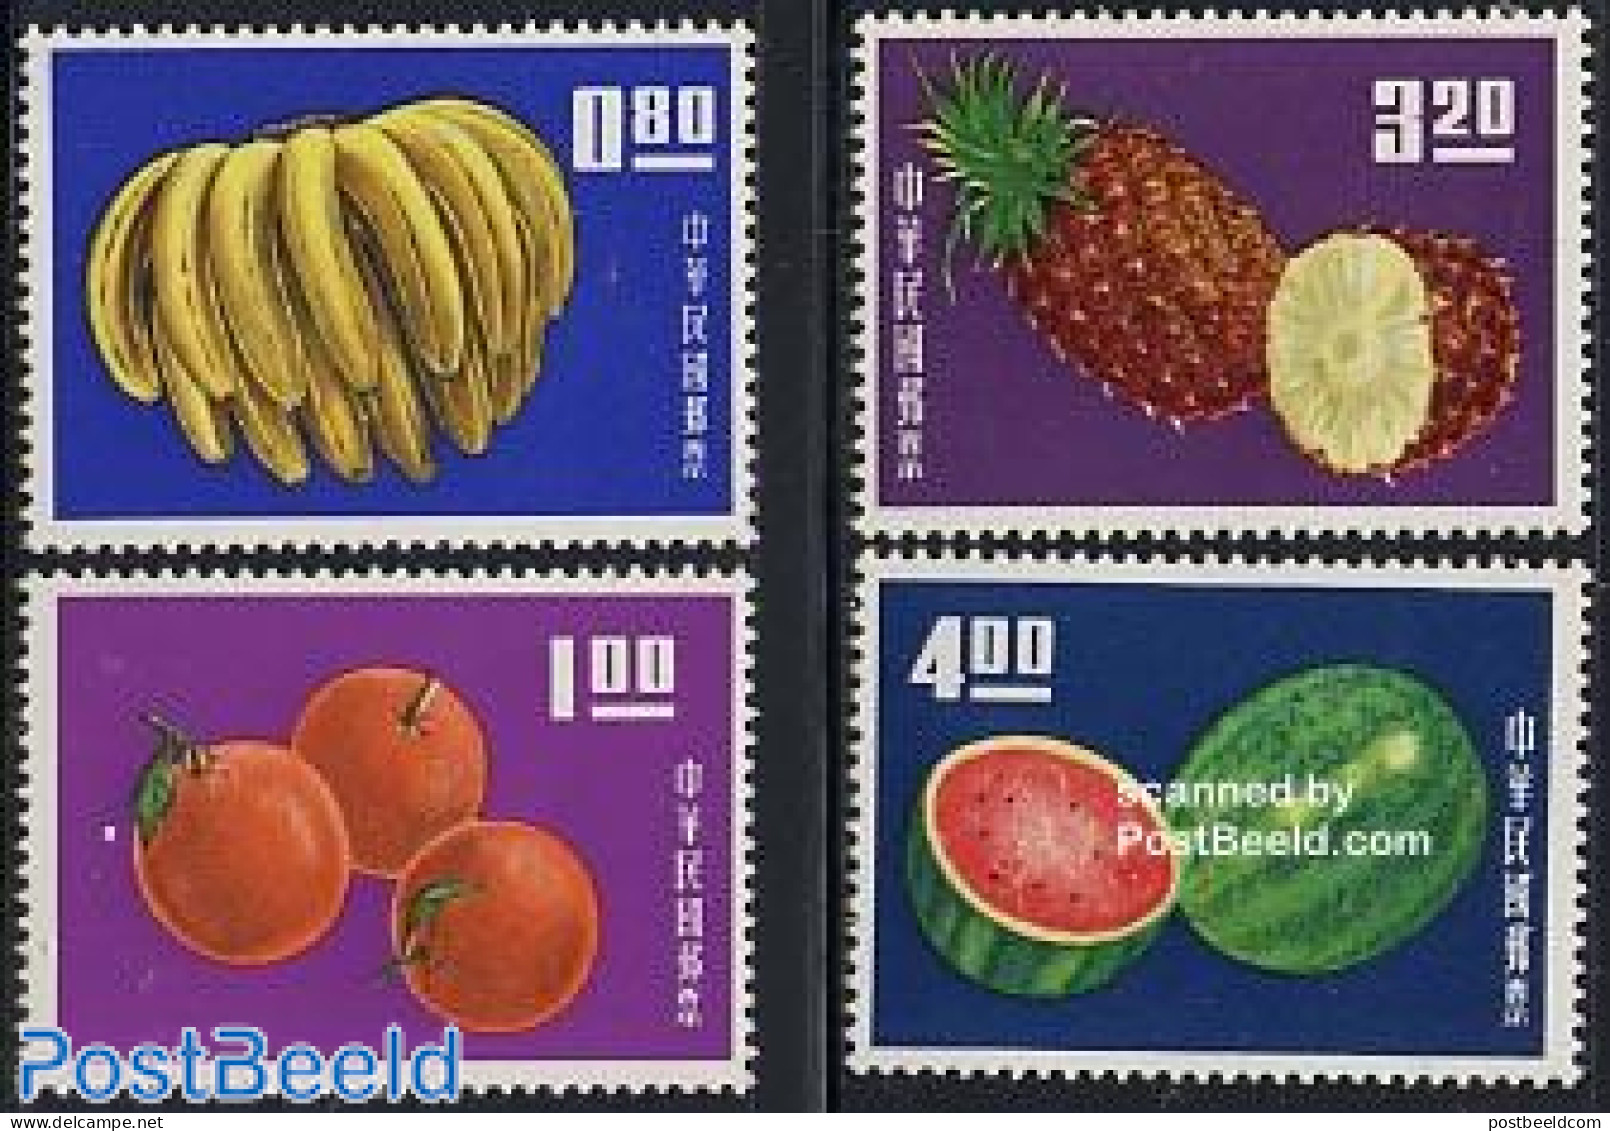 Taiwan 1964 Fruits 4v, Unused (hinged), Nature - Fruit - Frutas